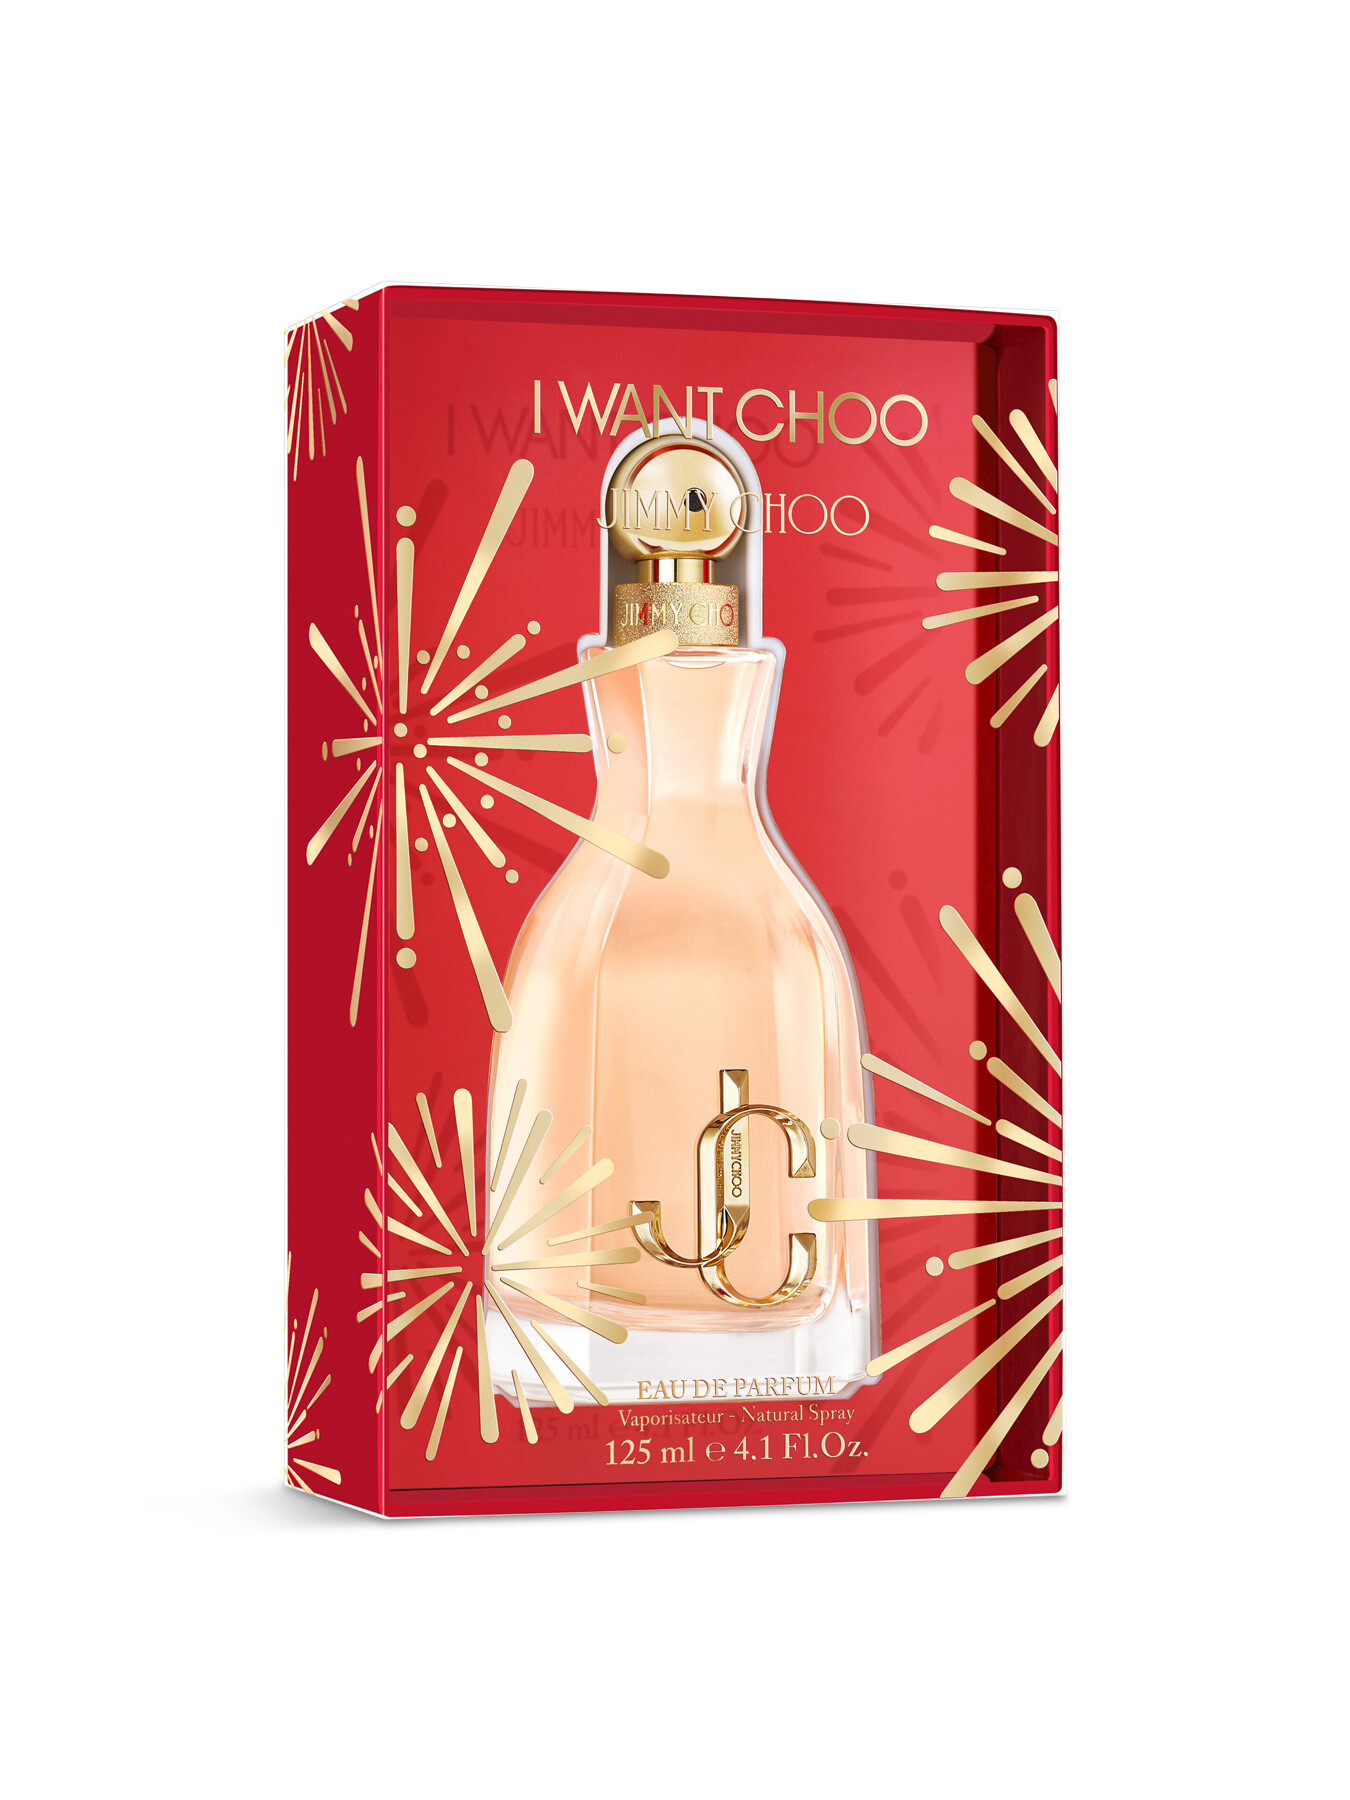 Jimmy Choo I Want Choo 125ml Limited Edition Eau De Parfum